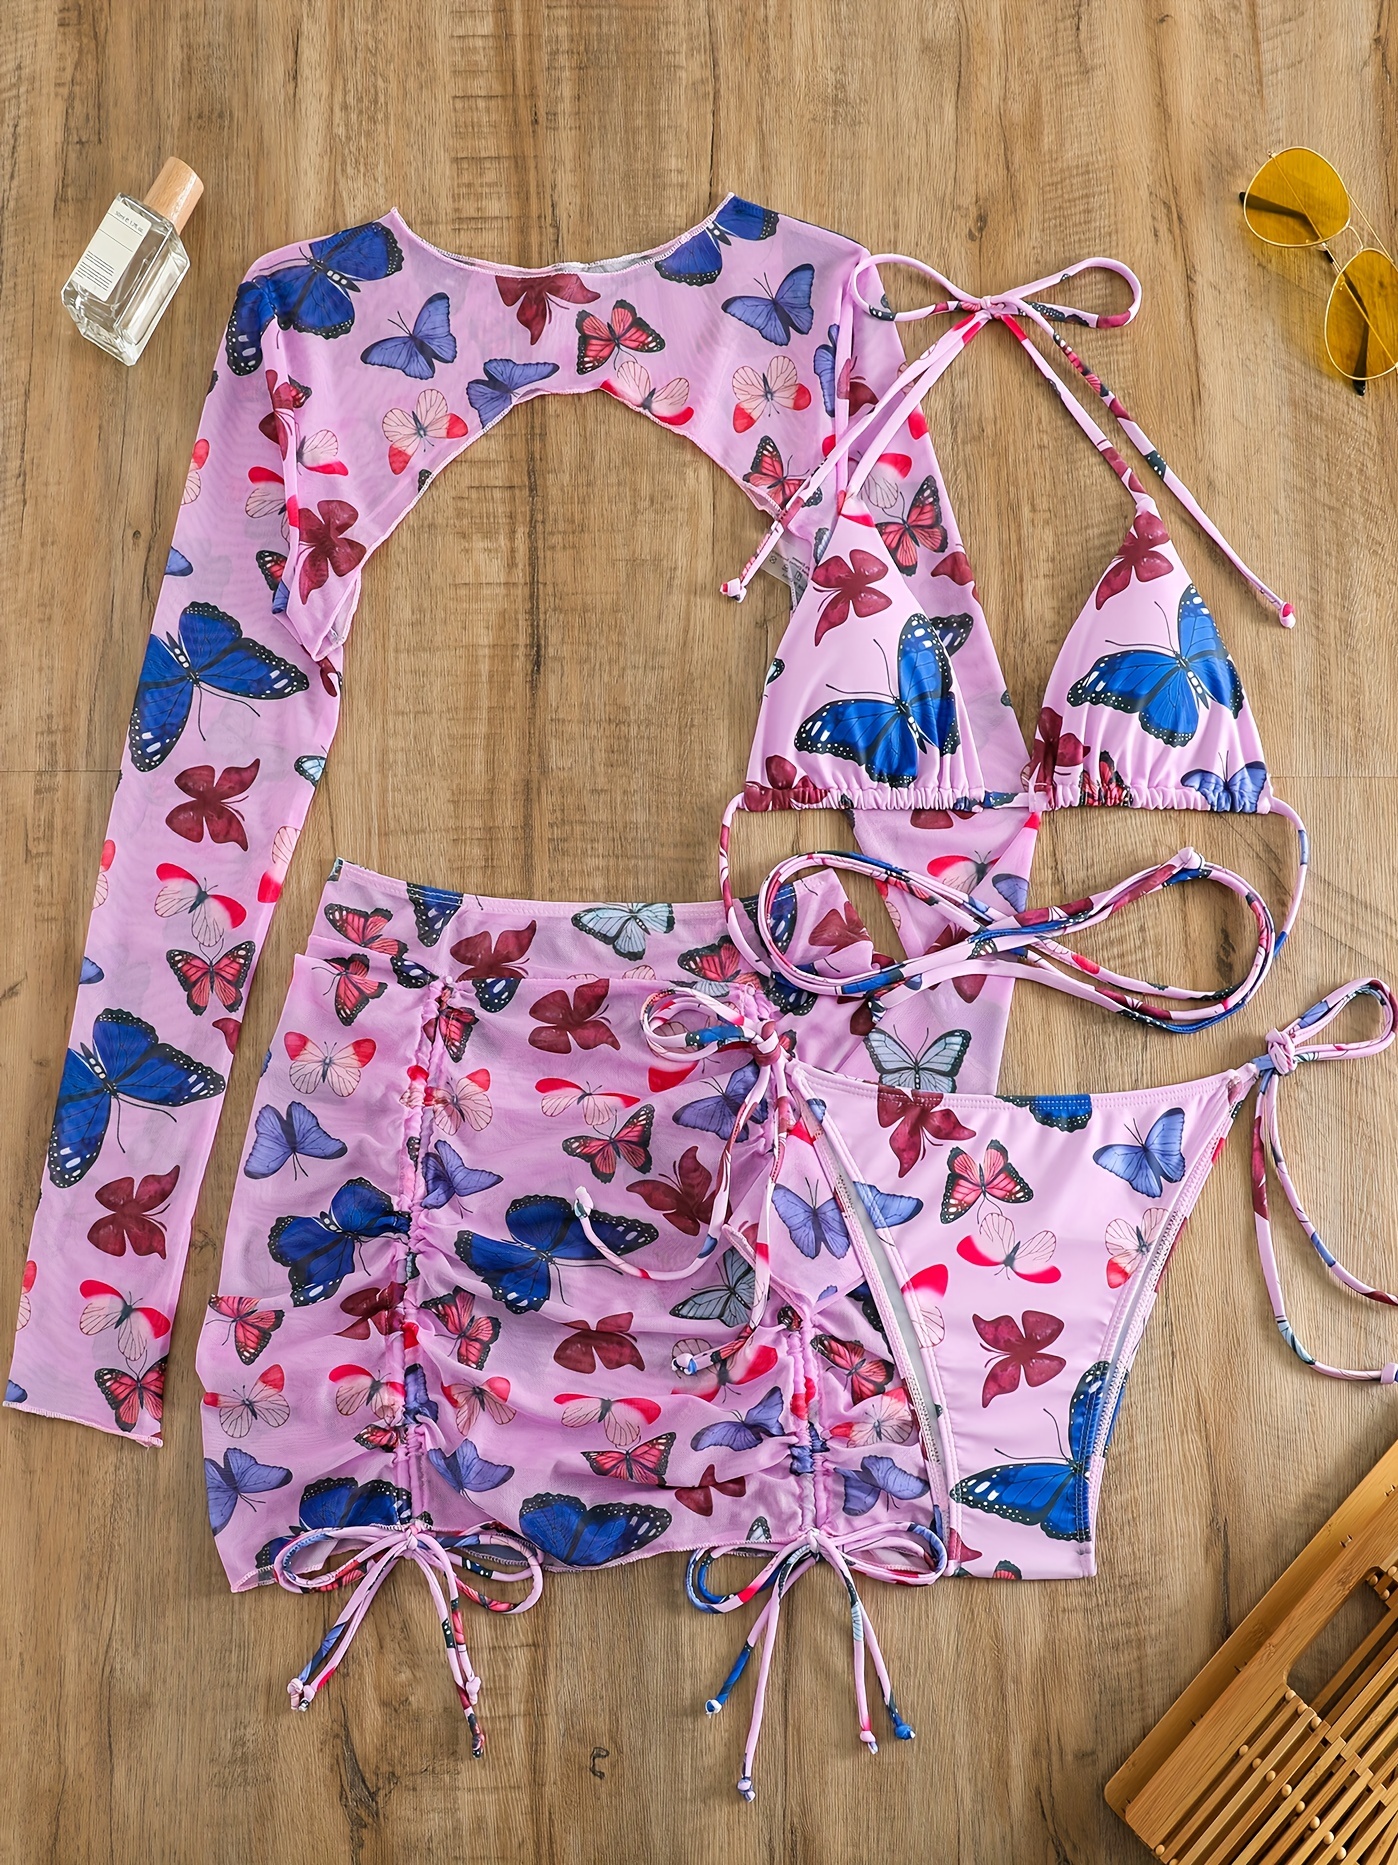 Teen Girls Swimsuits Tankini Size 140 Holiday Cute Tie-Dye Printbikini Set  Two Piece Girls Bathing Suits